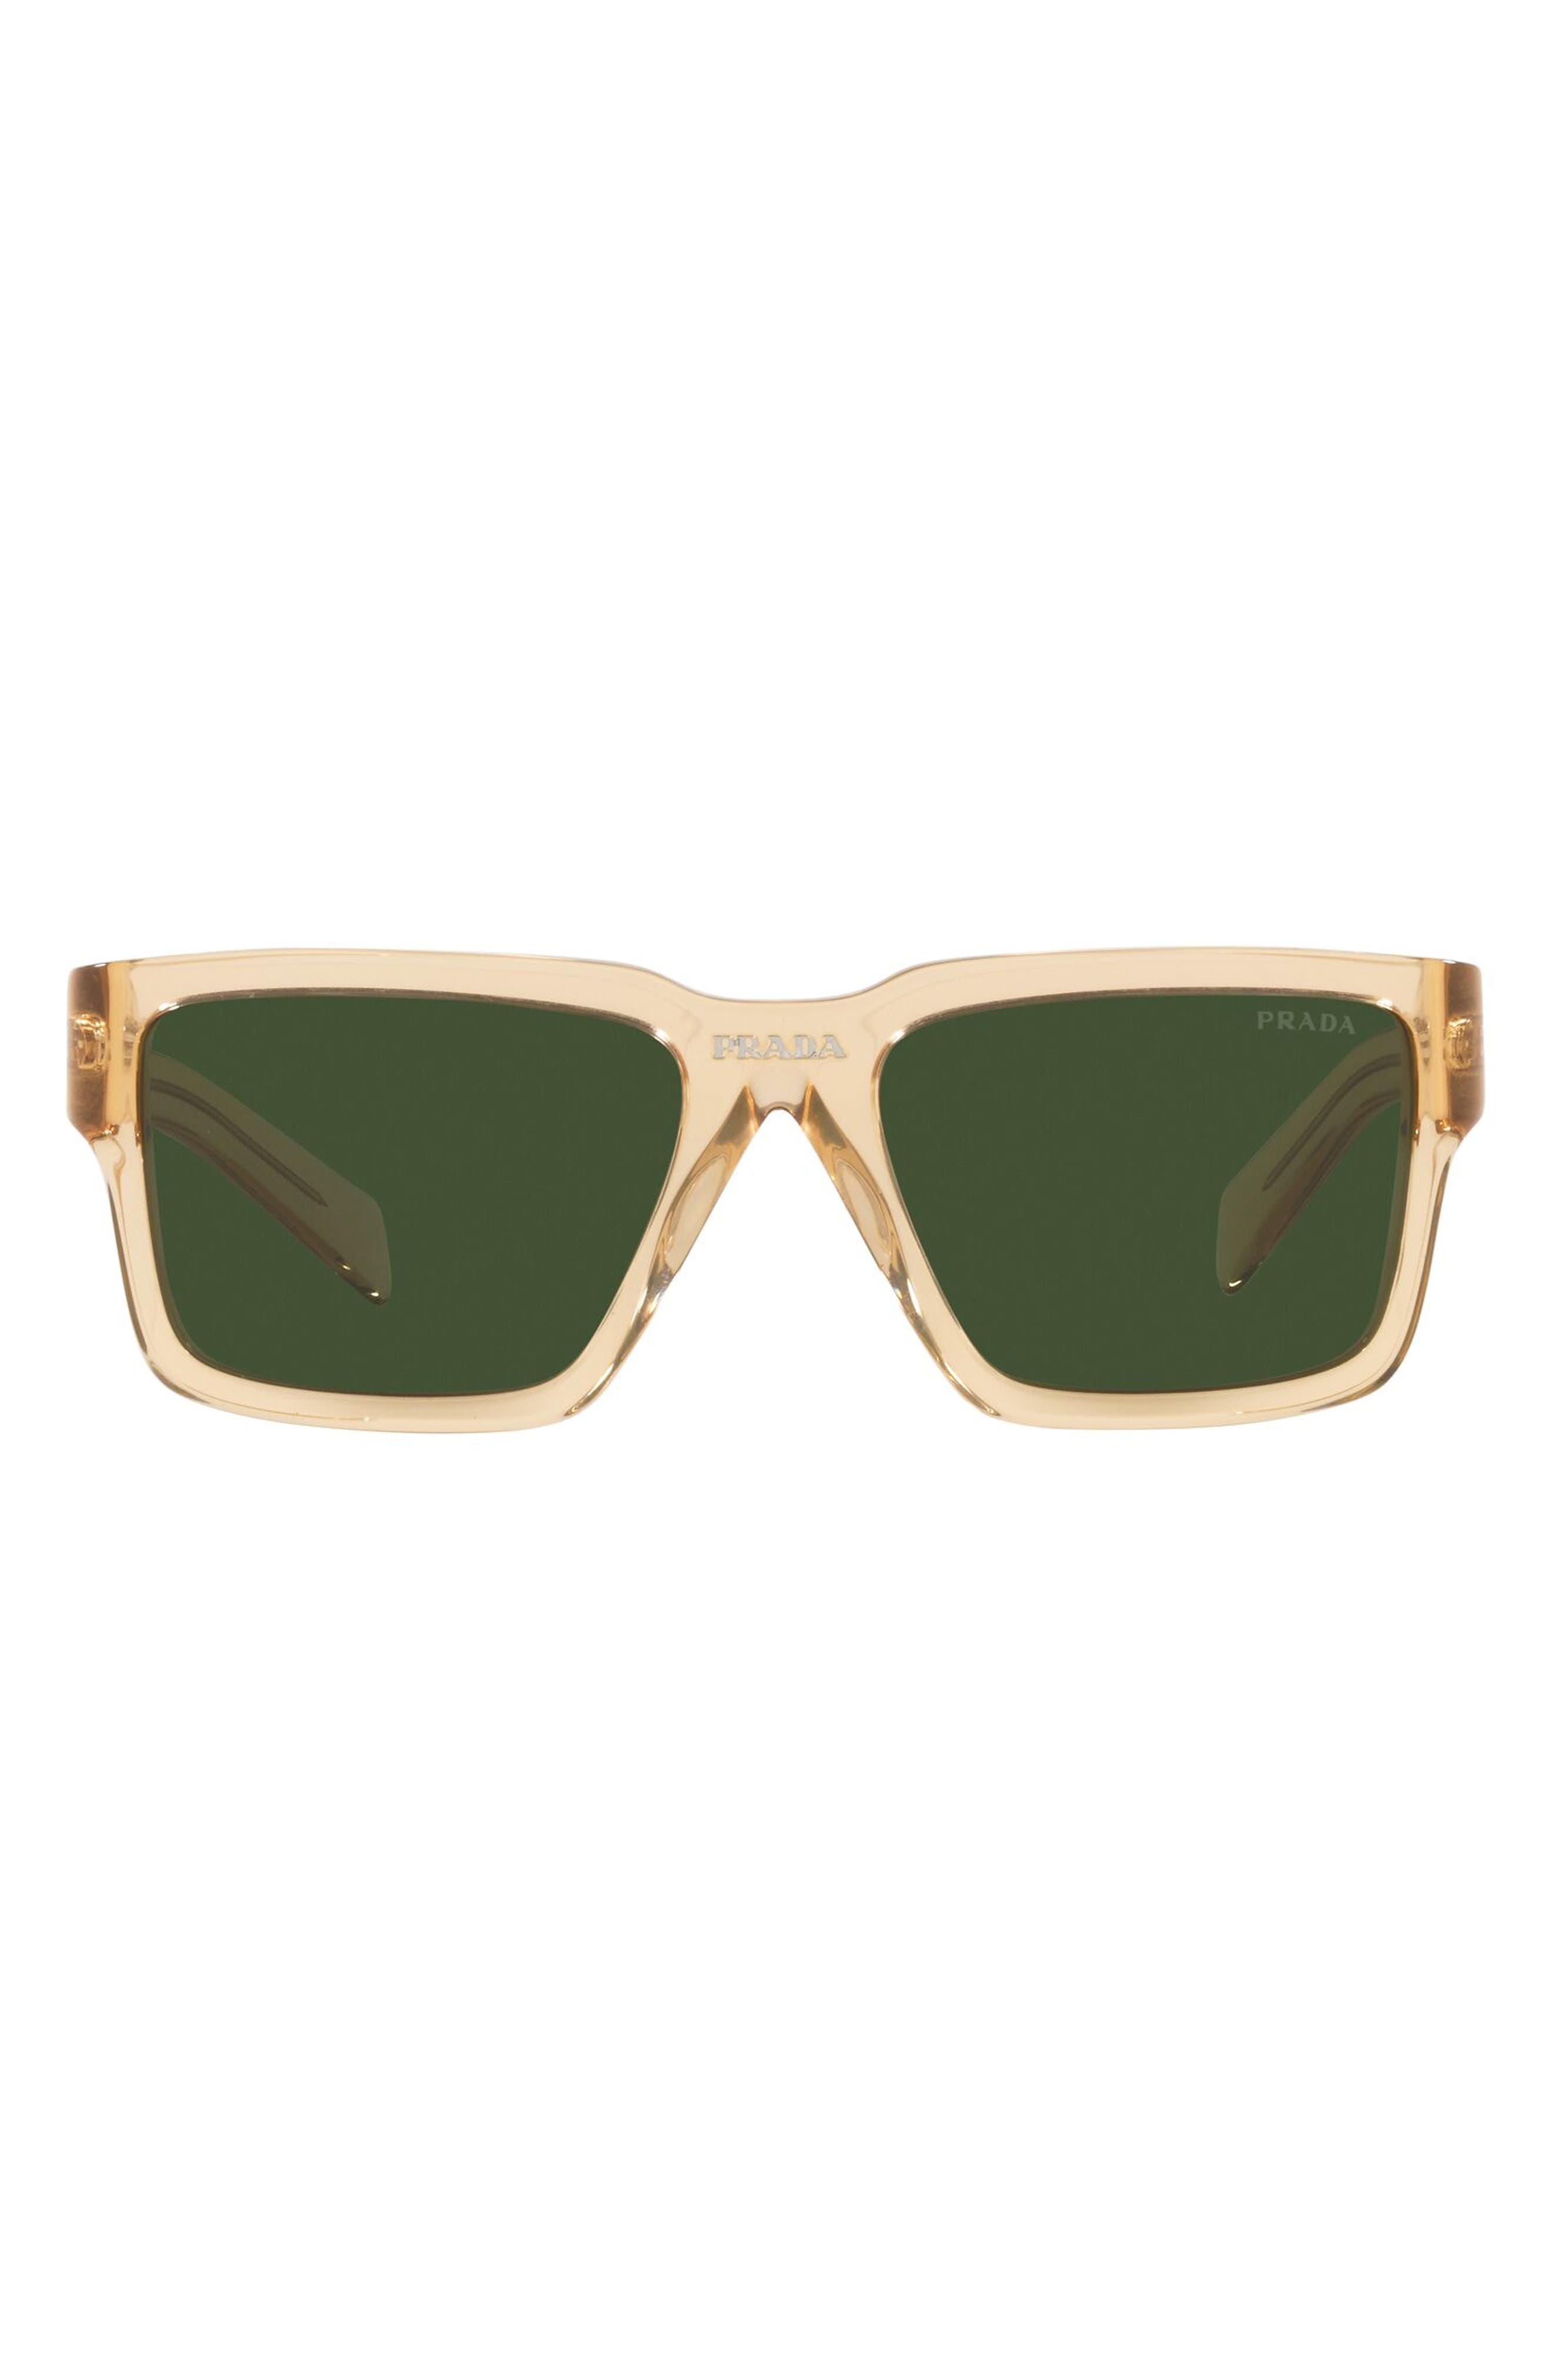 Prada 56mm Rectangular Sunglasses in Amber at Nordstrom